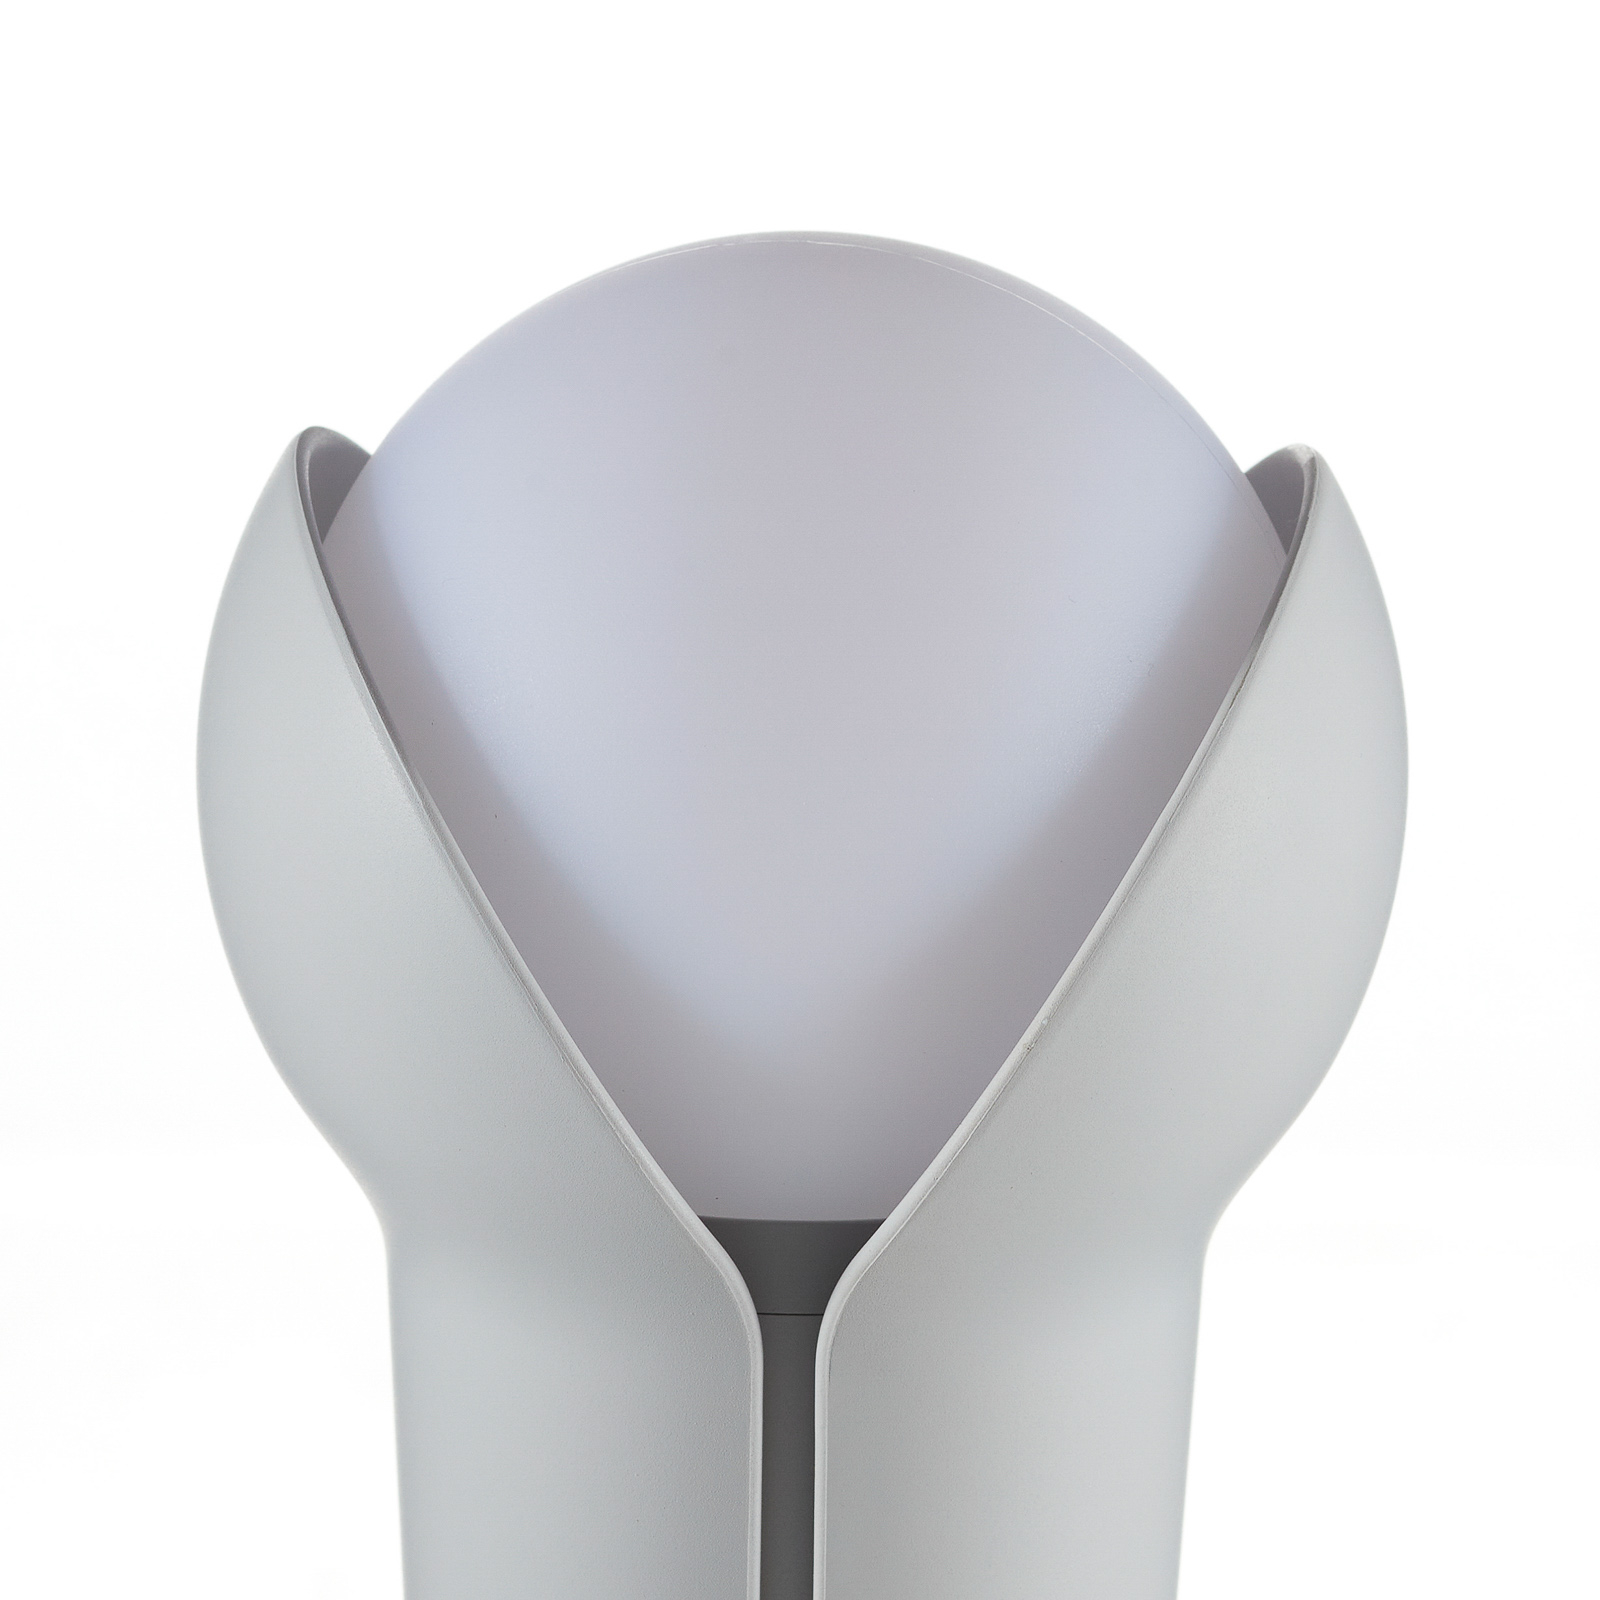 Innermost Bud lampe à poser LED, portable, Ash